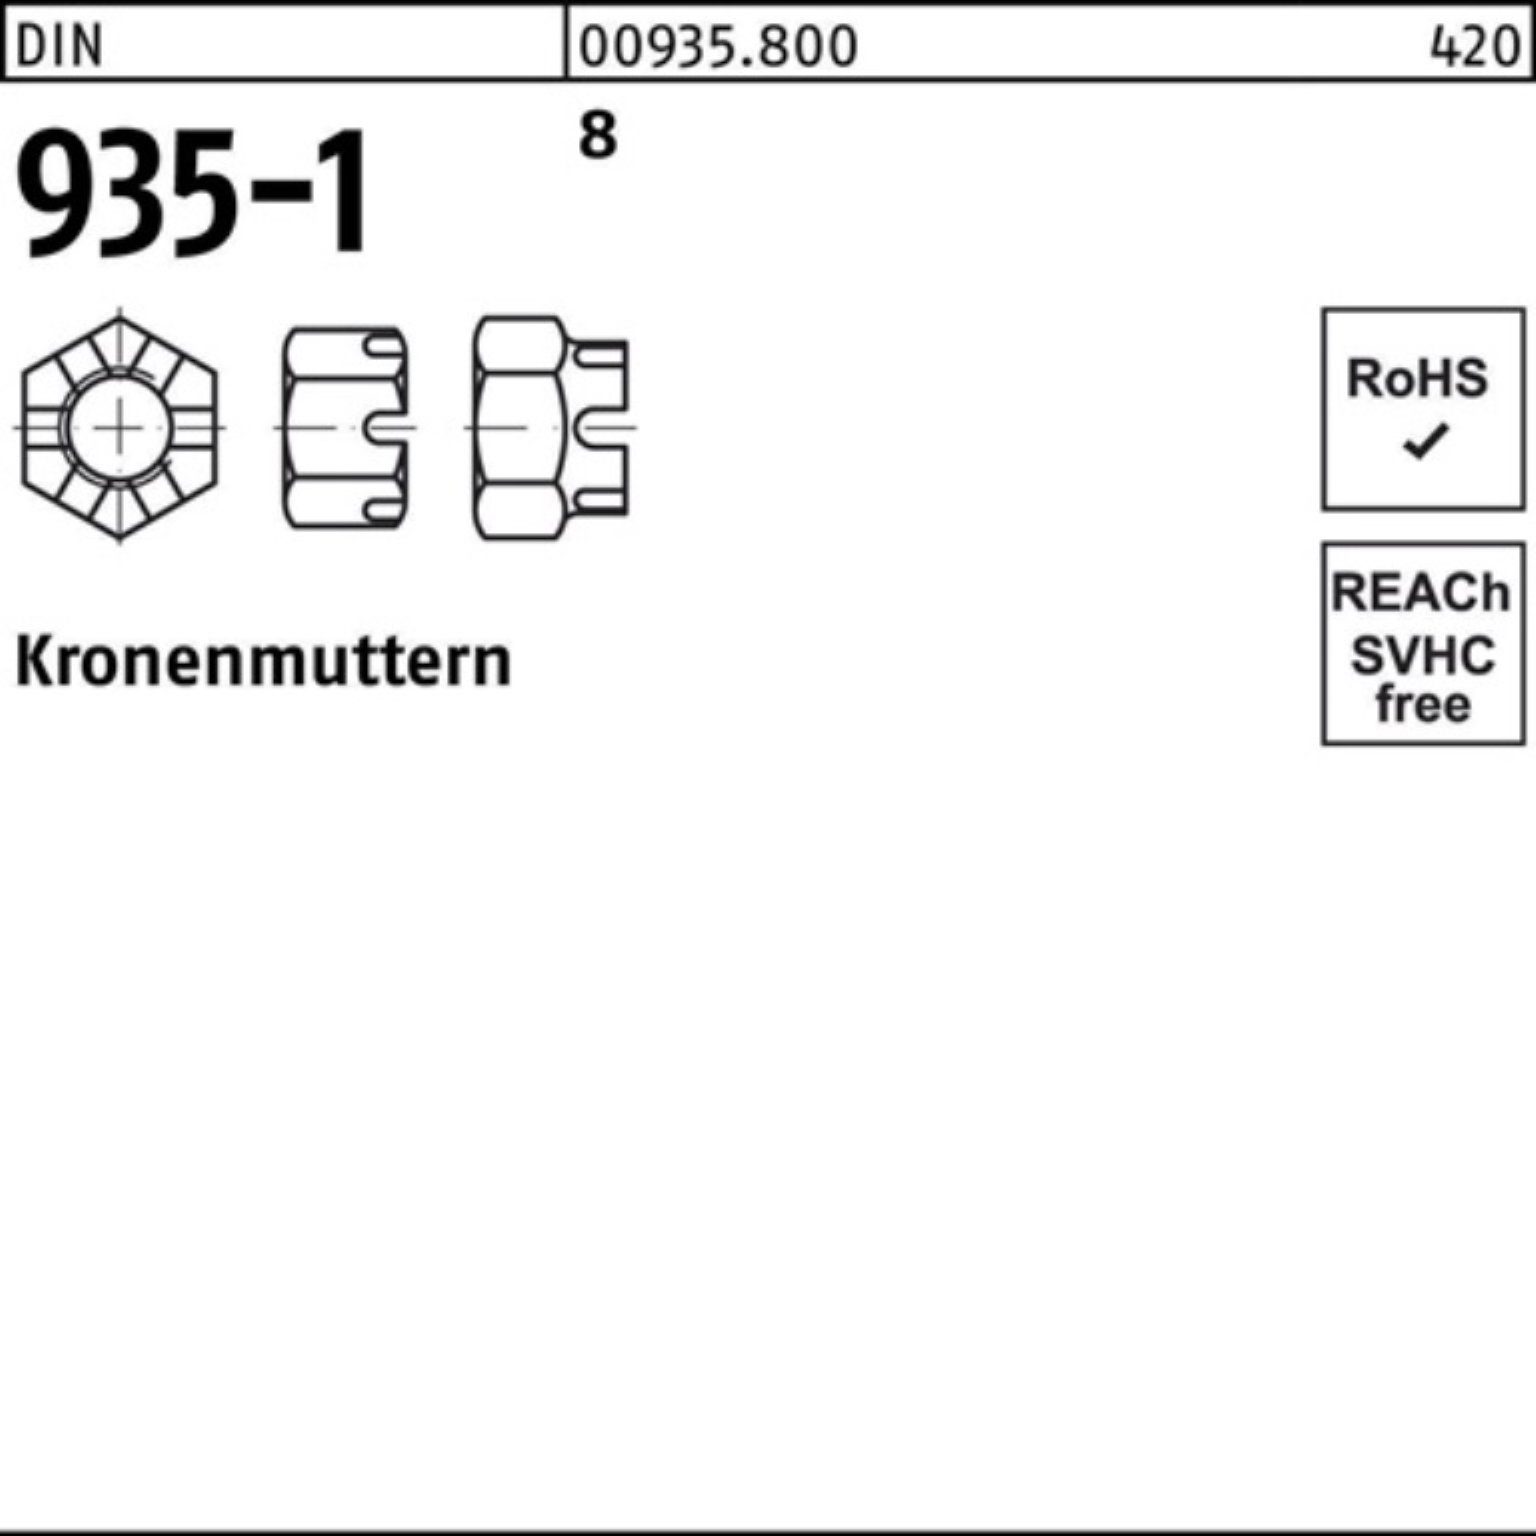 Reyher Kronenmutter 100er Pack Kronenmutter DIN 935-1 M12 SW 19 8 100 Stück DIN 935-1 8 K